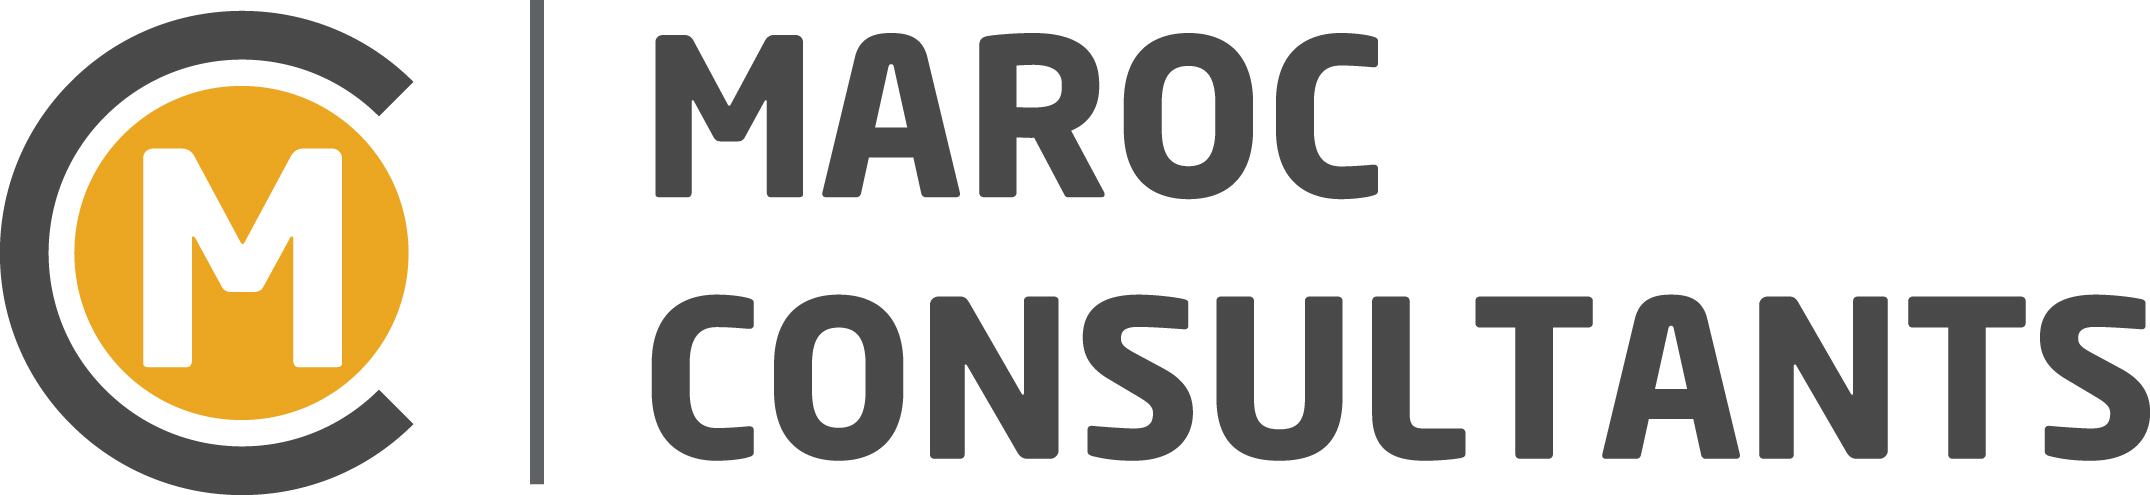 Maroc Consultants